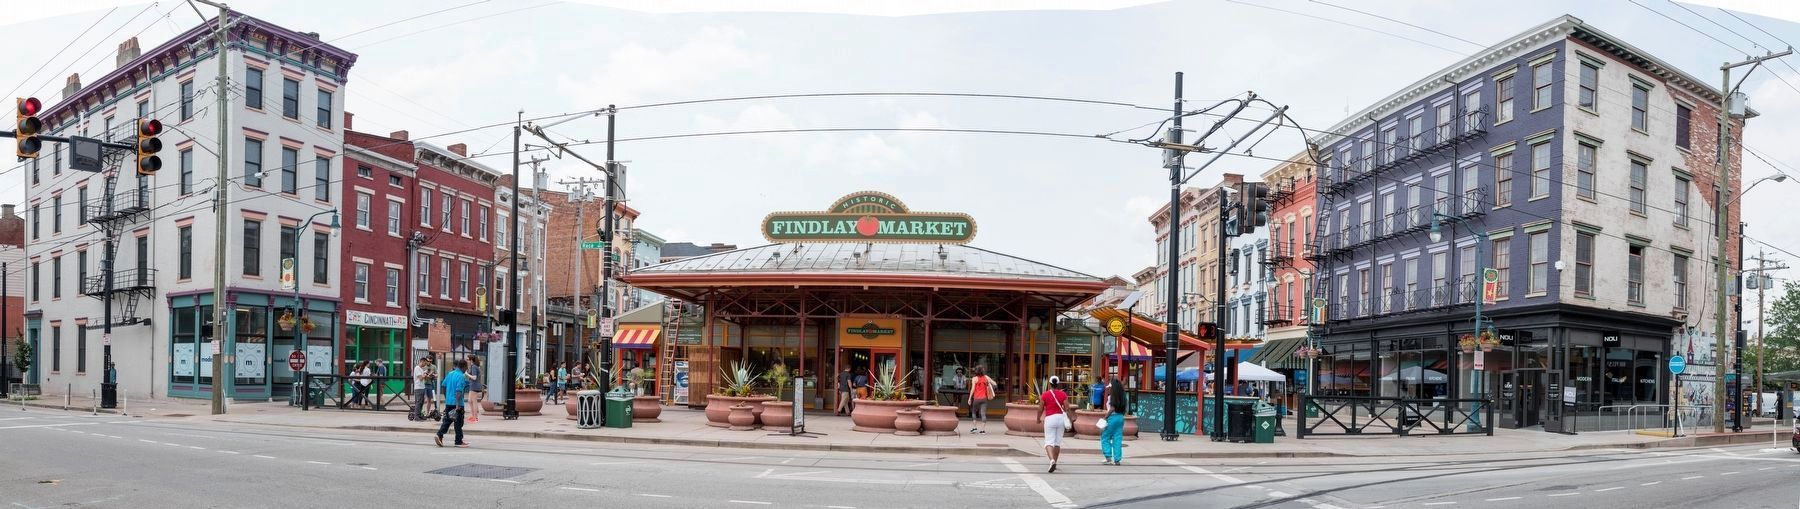 Findlay Market, Race Street Entrance, Cincinnati Ohio image. Click for full size.